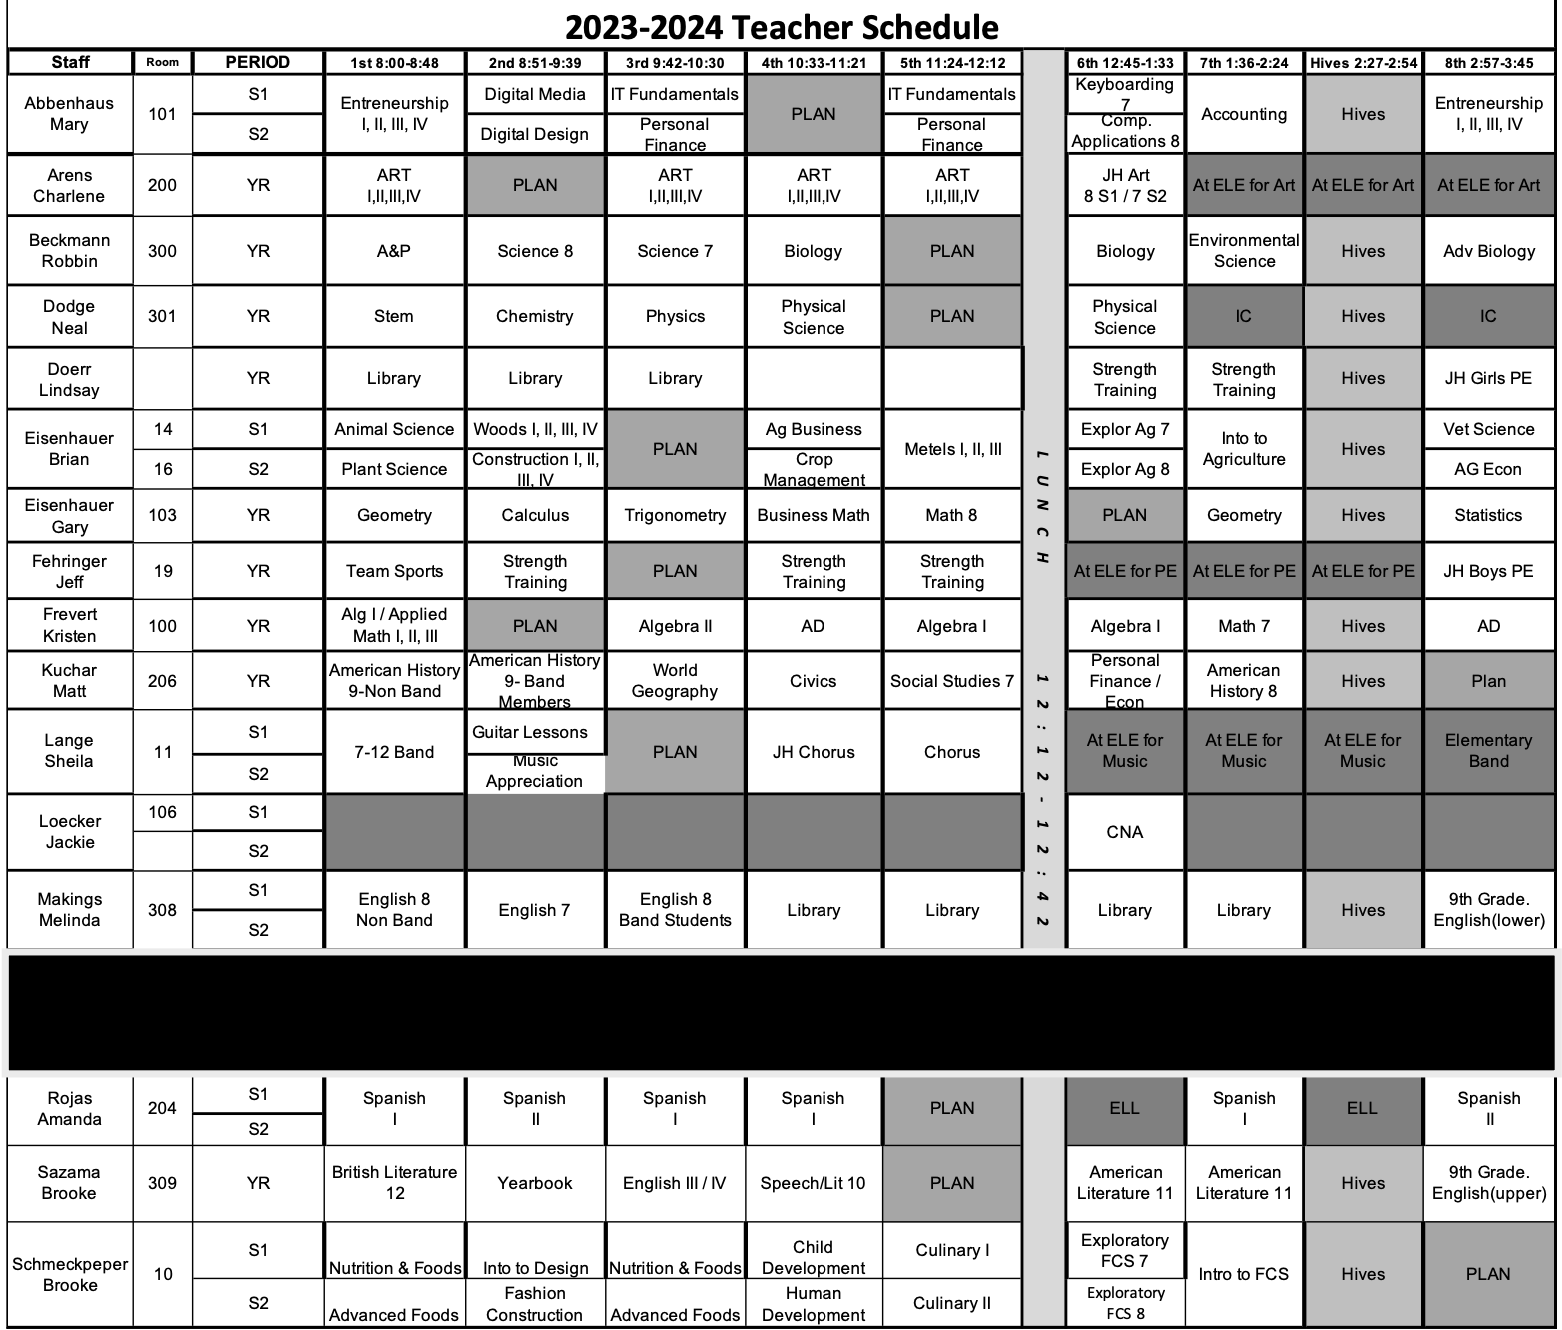 2023-2024 Teachers' Schedule